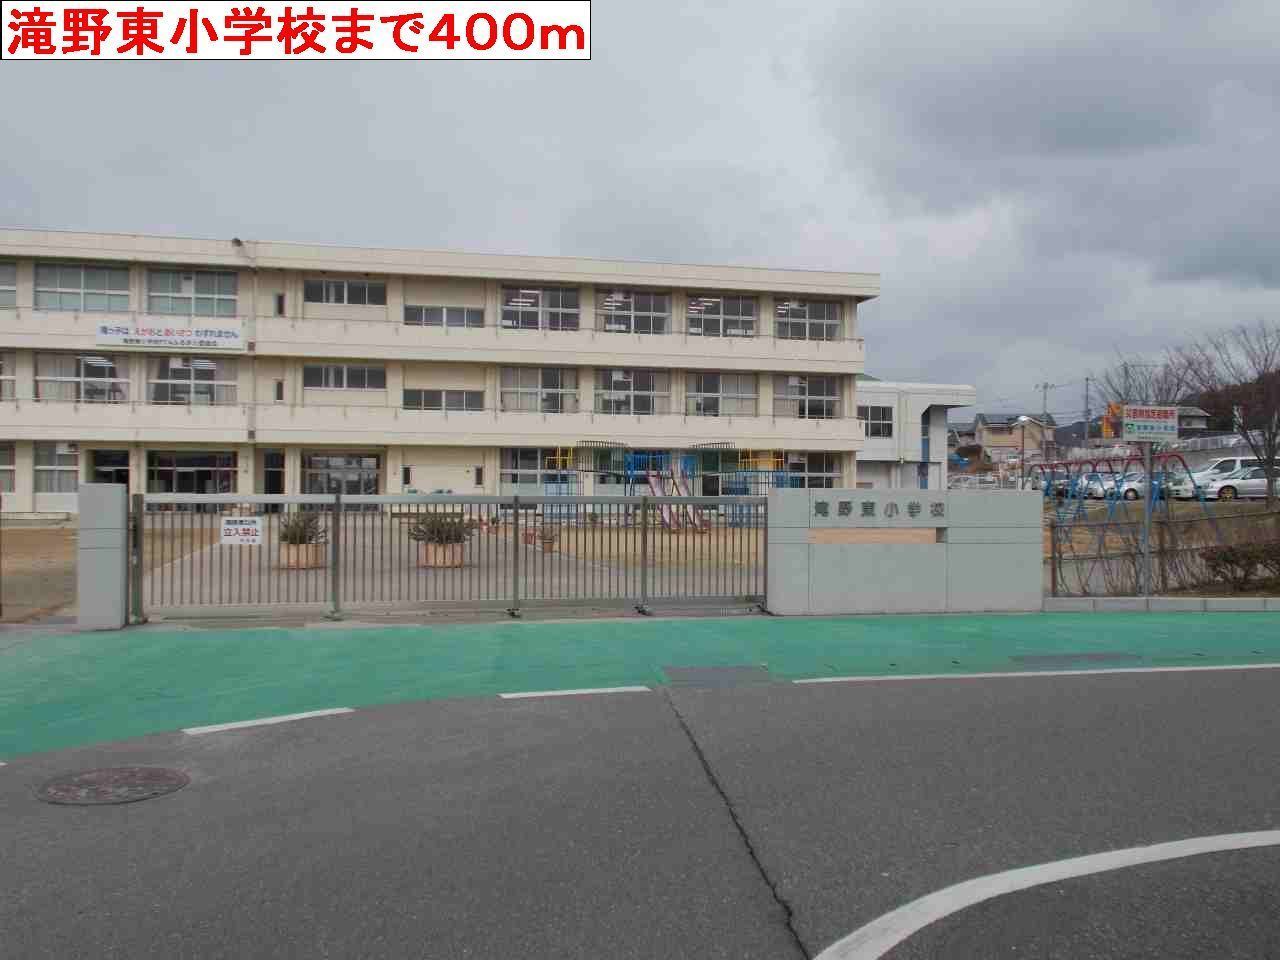 Primary school. 400m until Takino Higashi elementary school (elementary school)